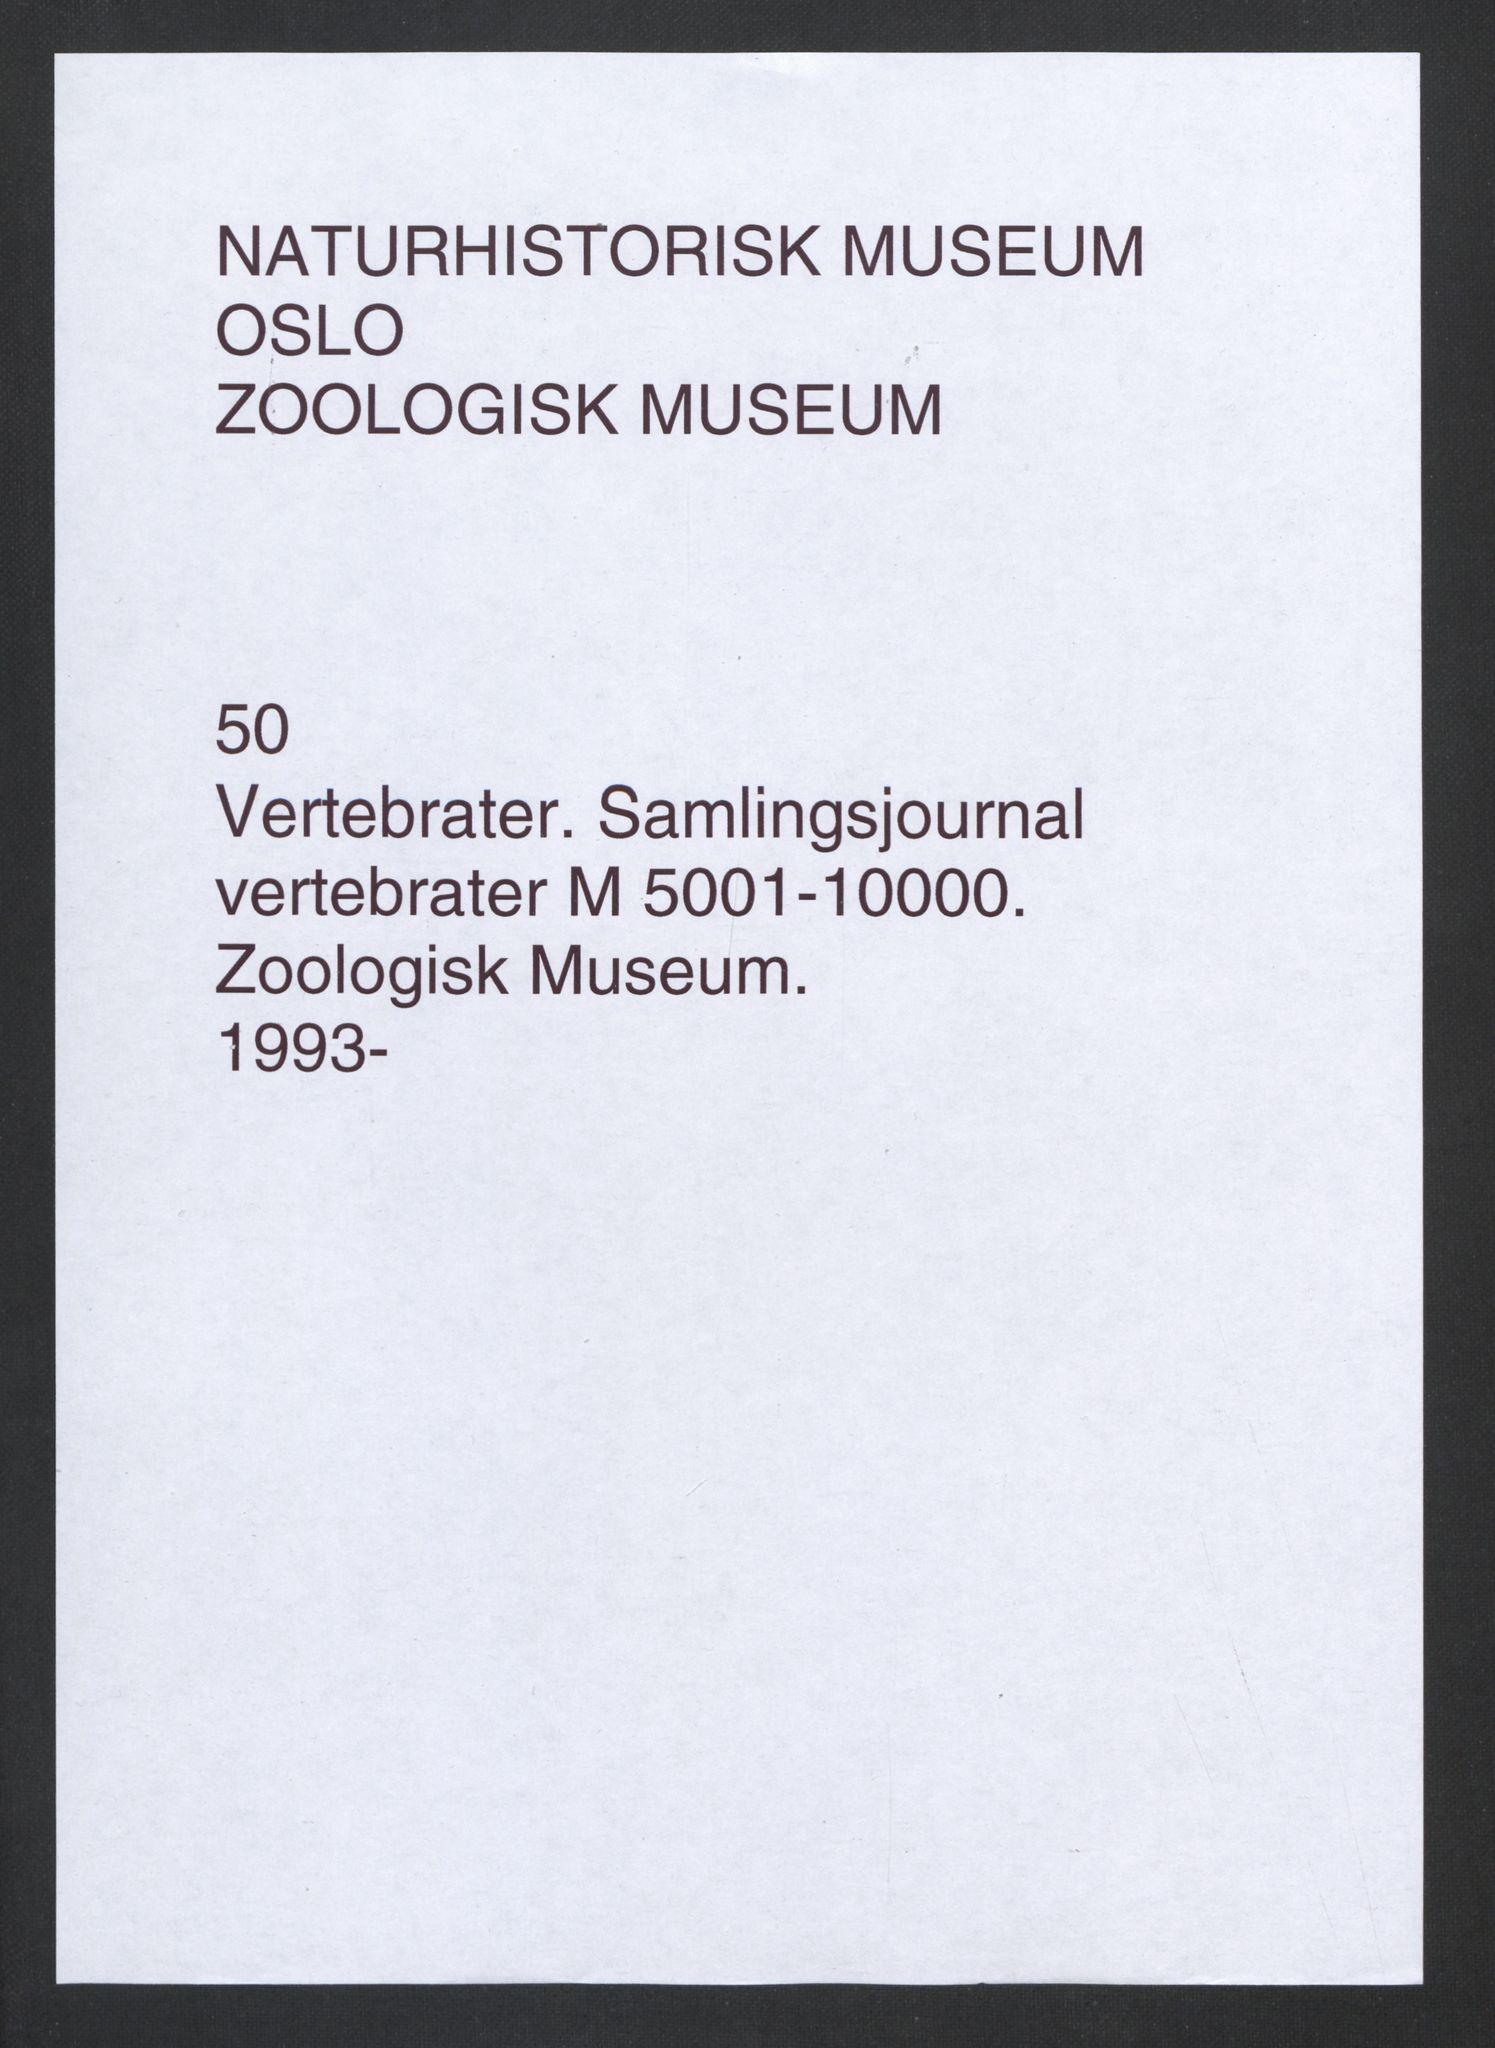 Naturhistorisk museum (Oslo), NHMO/-/5, 1993-2016